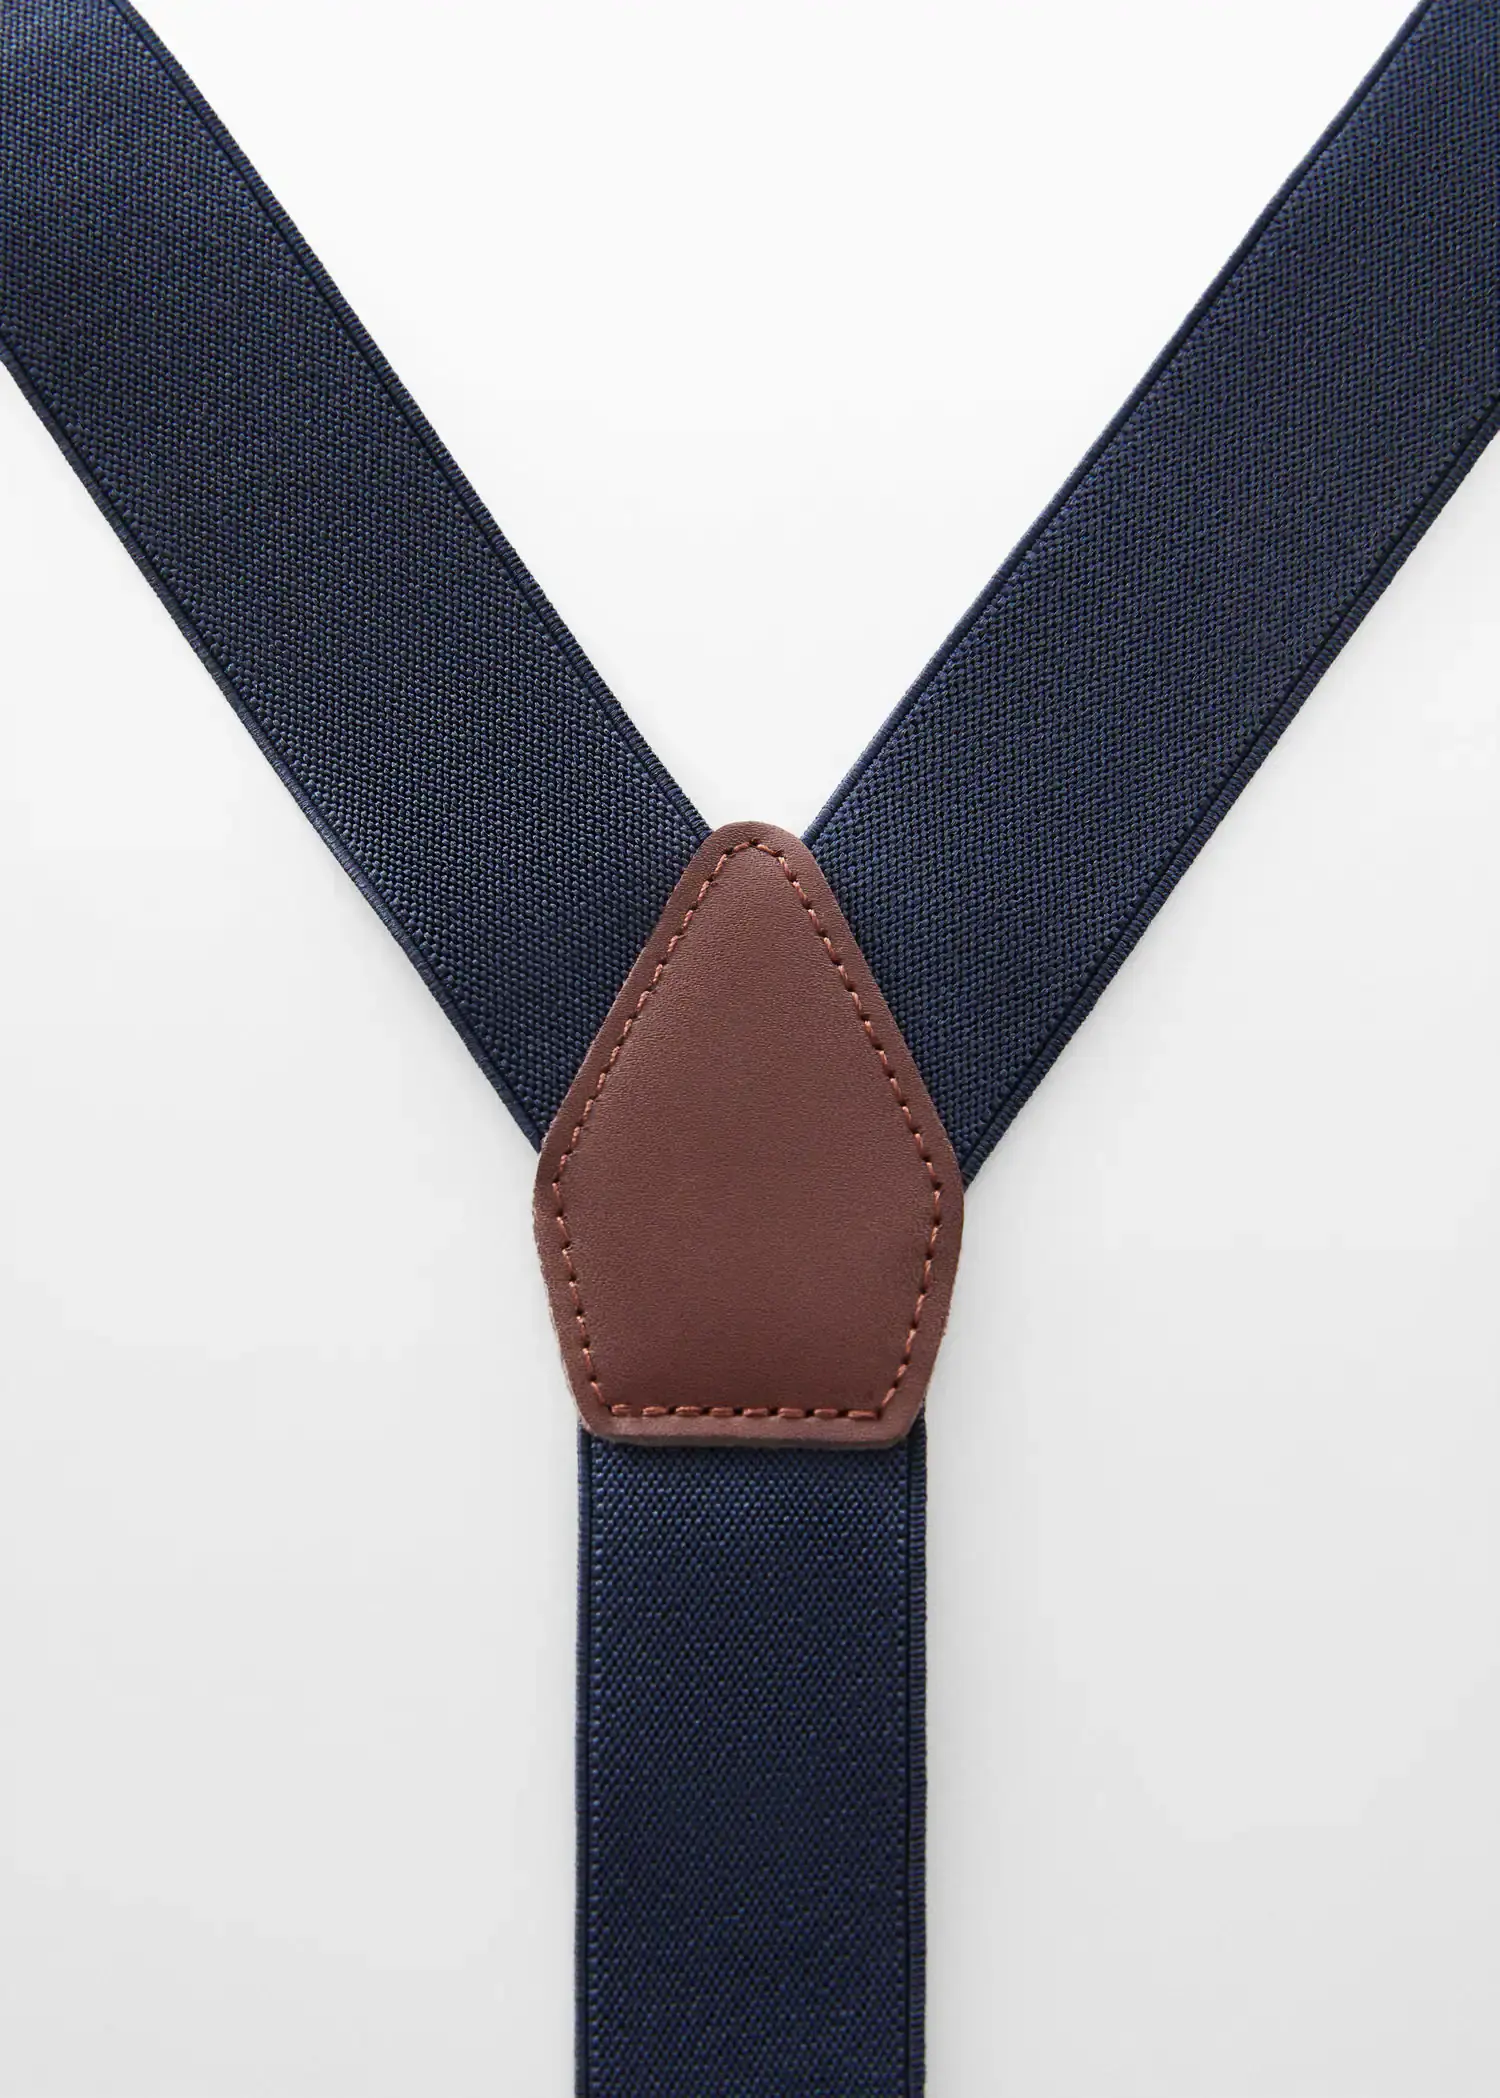 Mango Adjustable elastic straps with leather details. 2